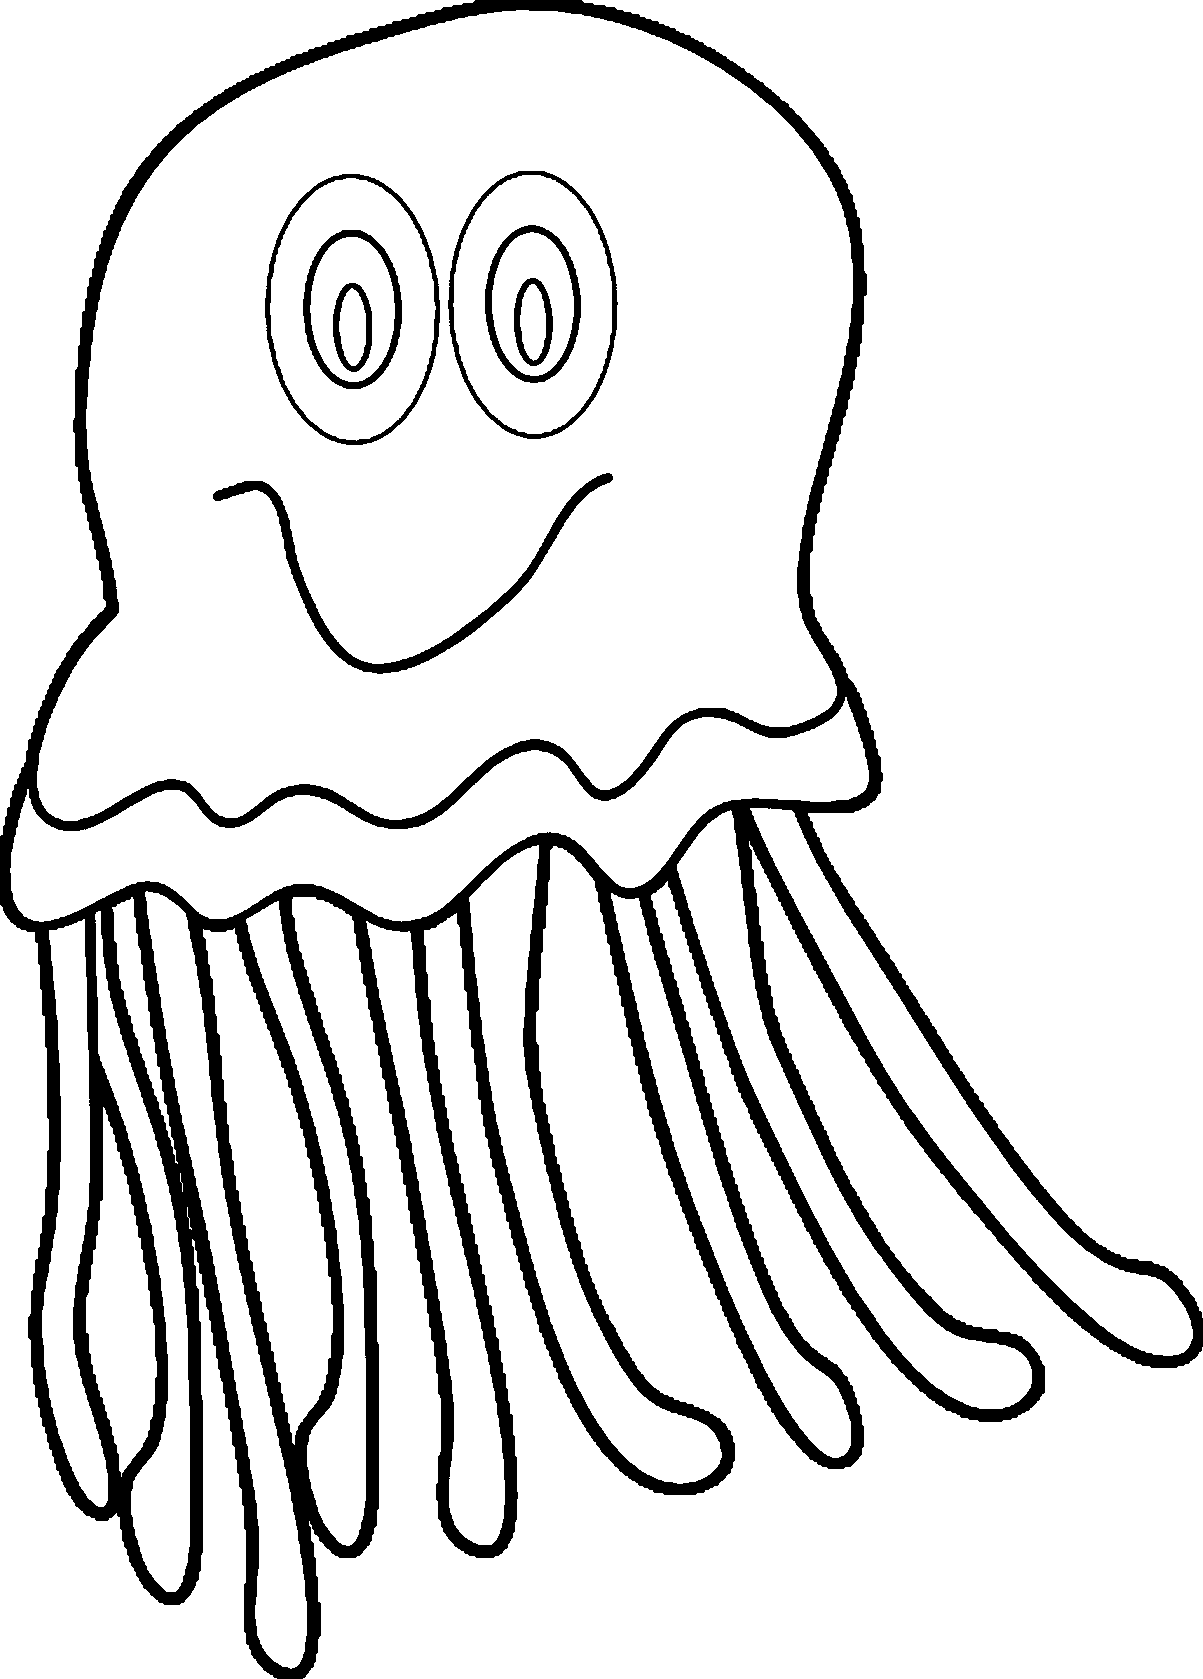 jellyfish clipart black and white - photo #18